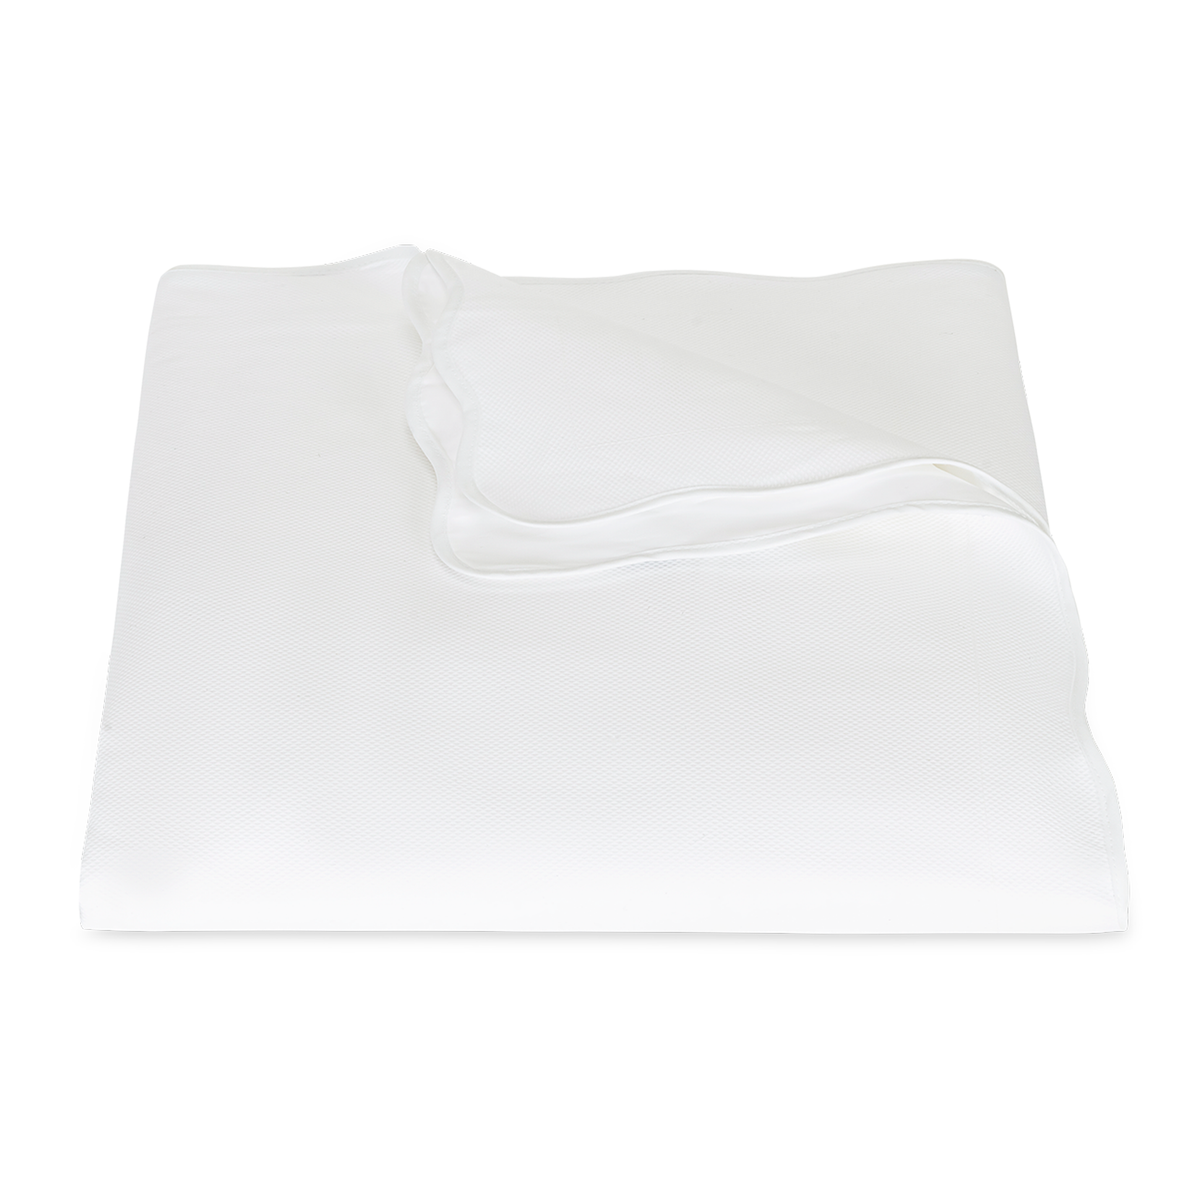 Duvet Cover of Matouk Camilla Pique Bedding in Color White